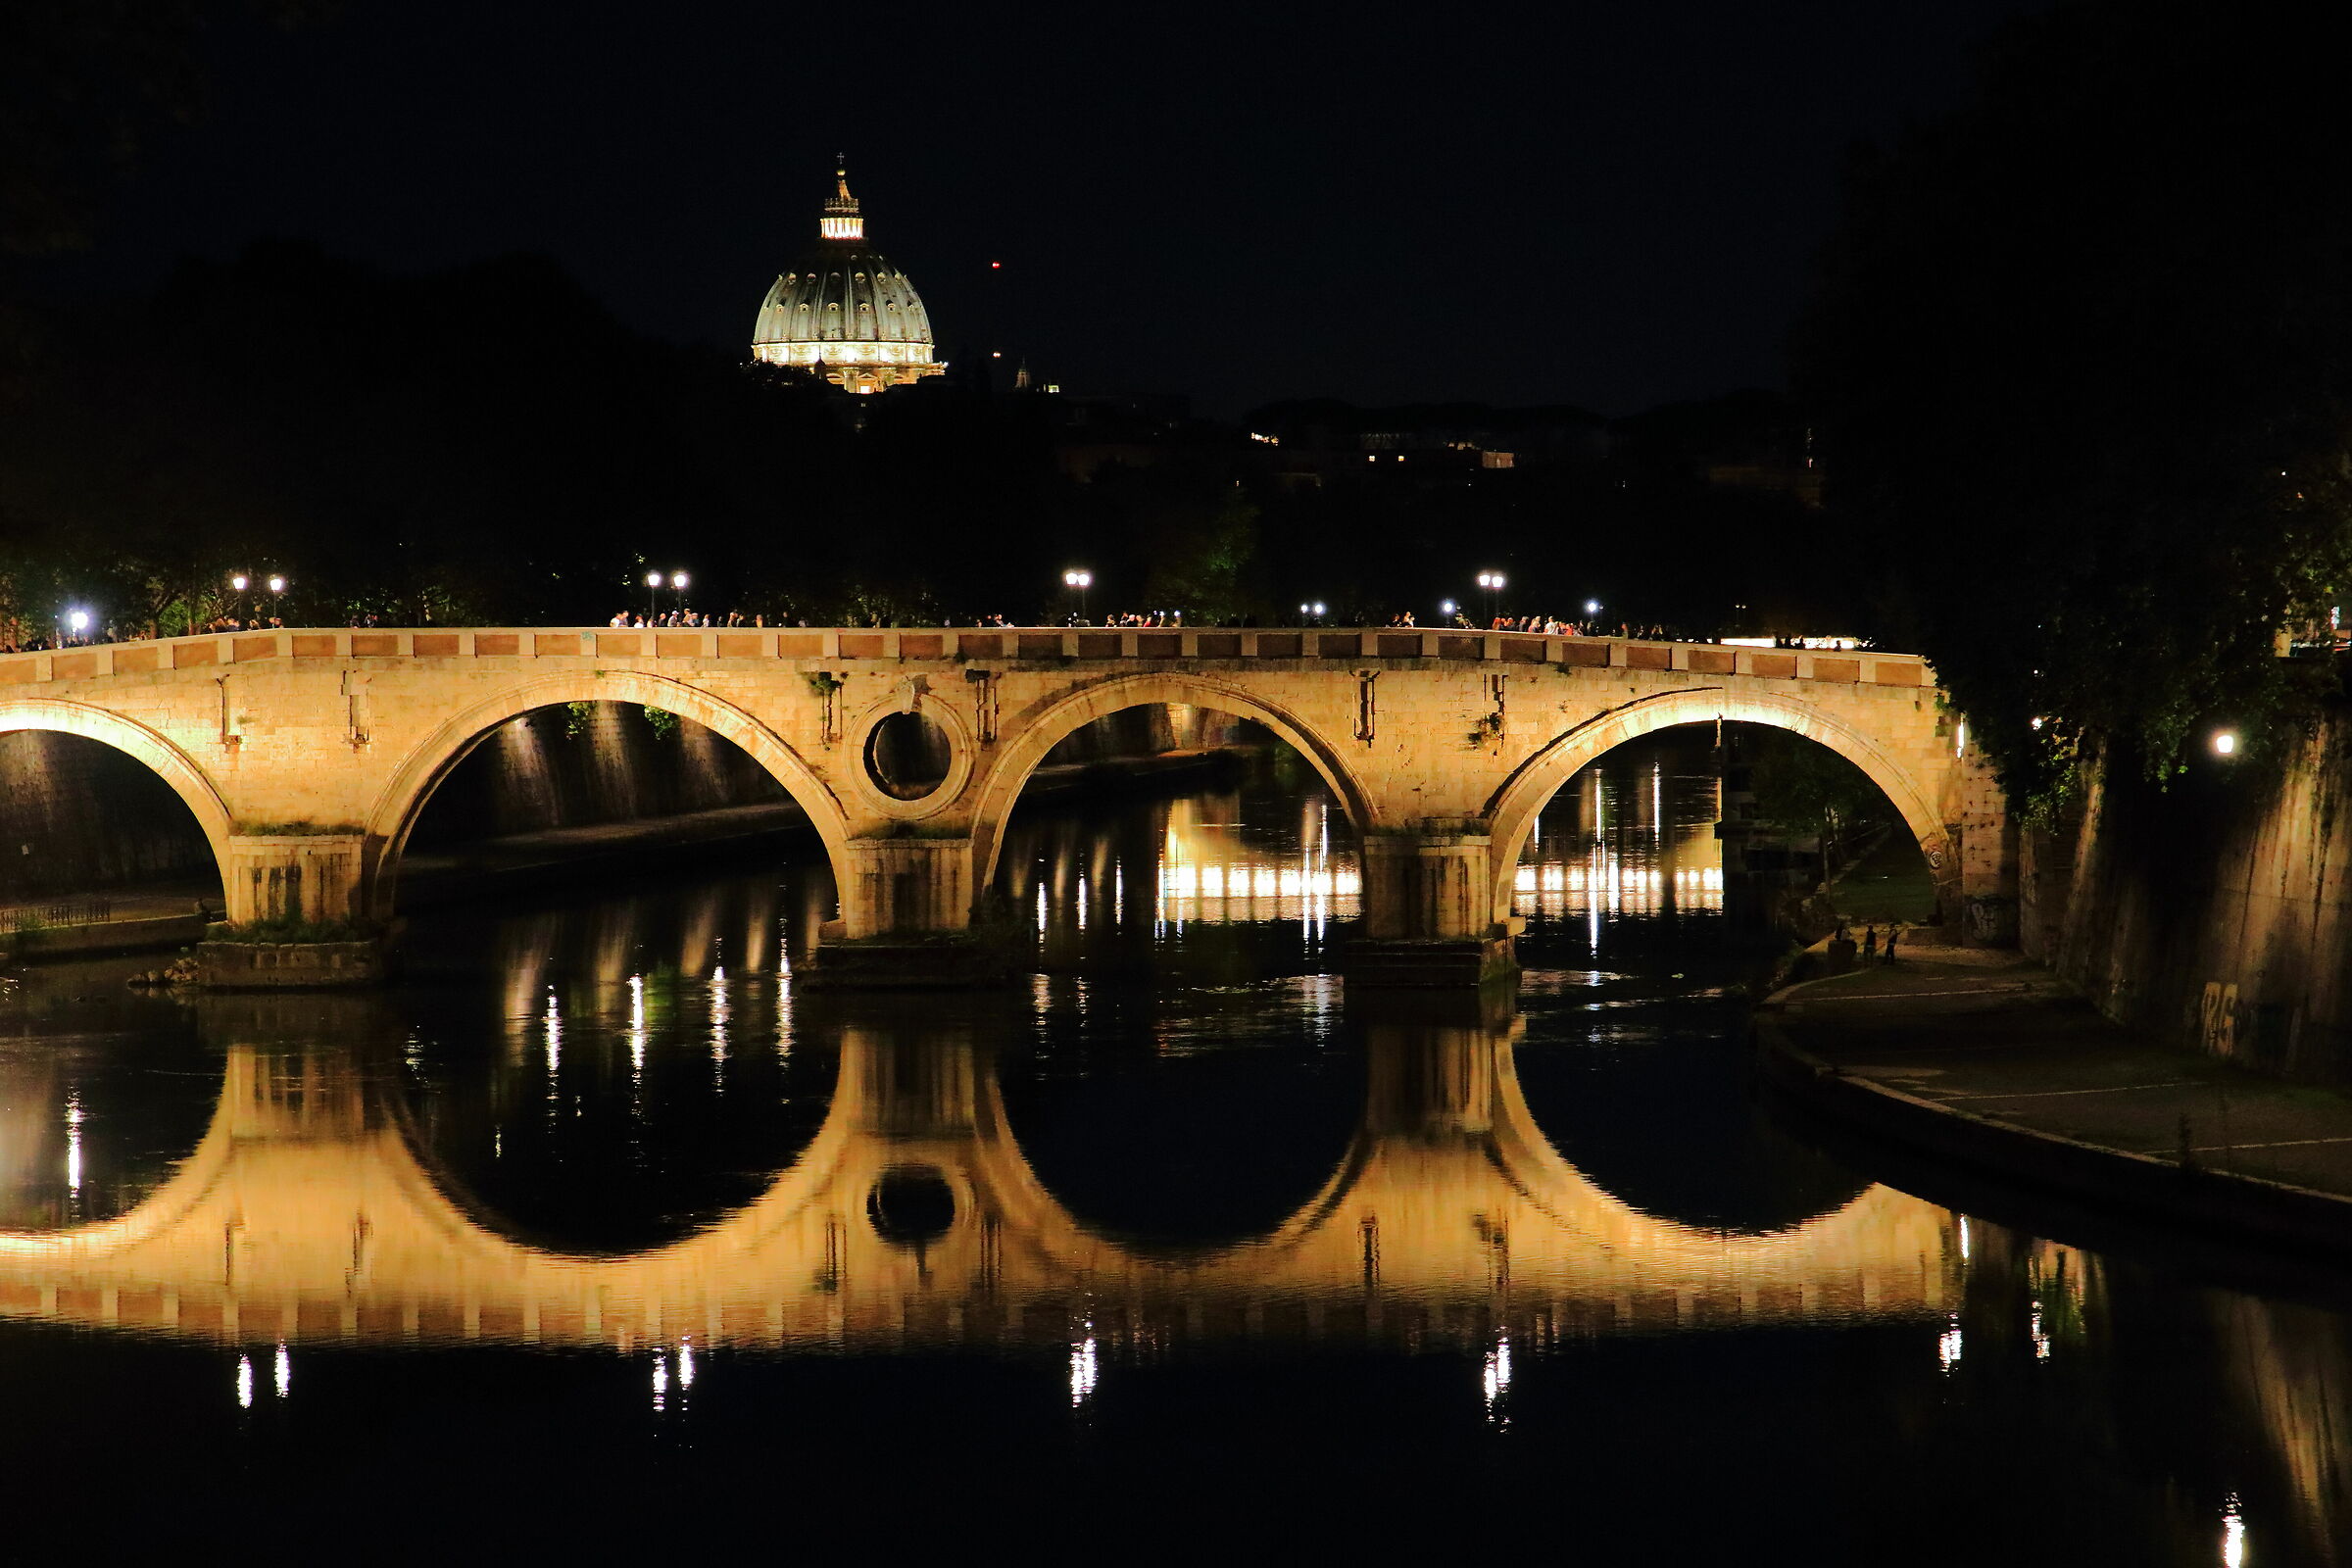 The reflected bridge...